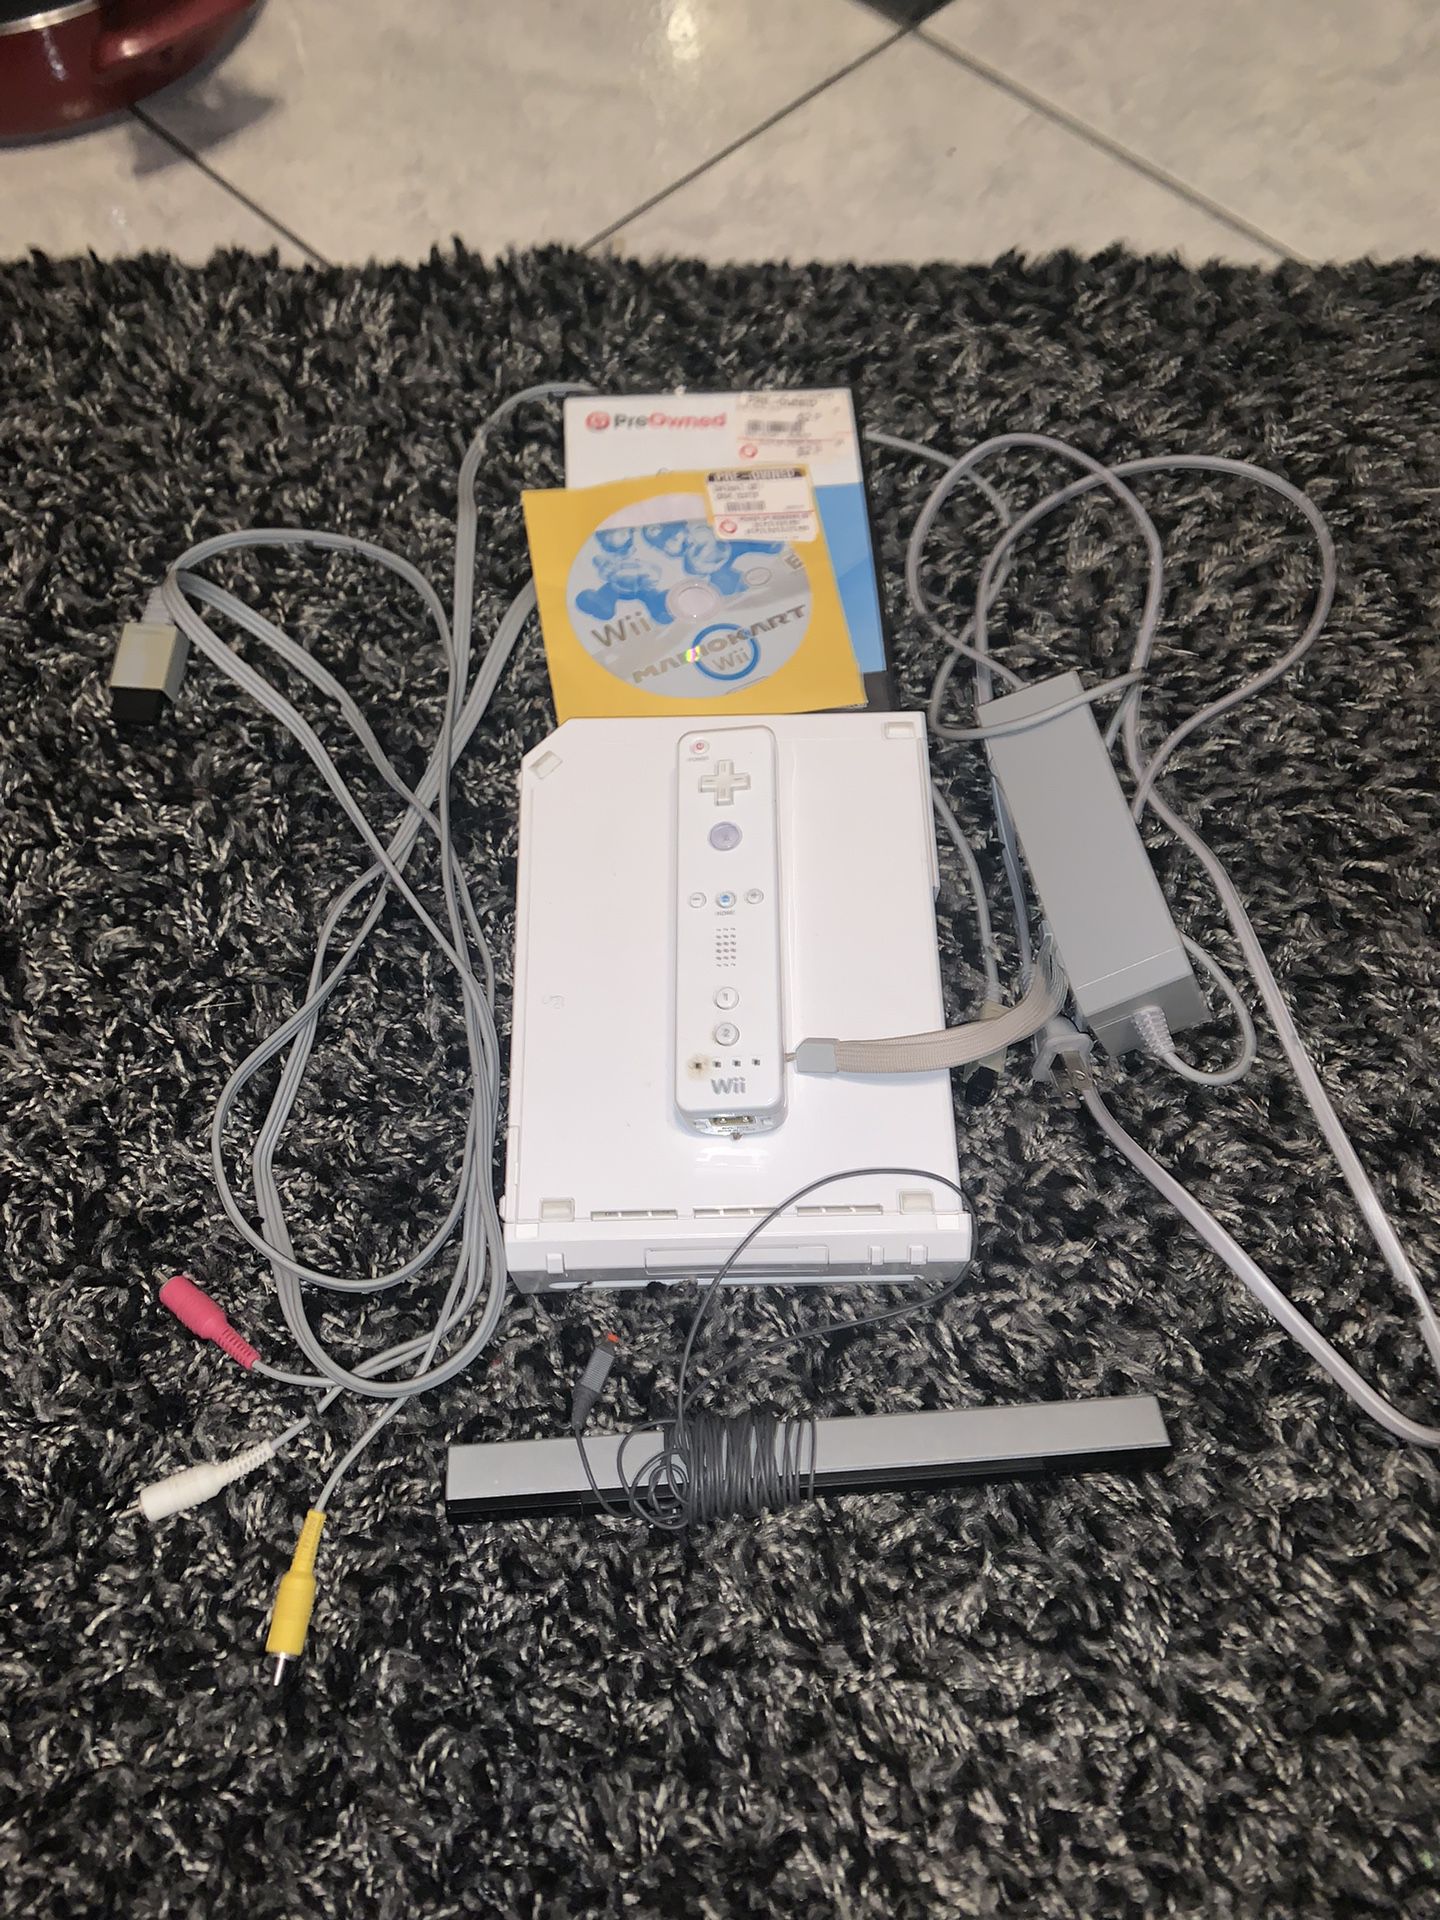 Wii Console Bundle